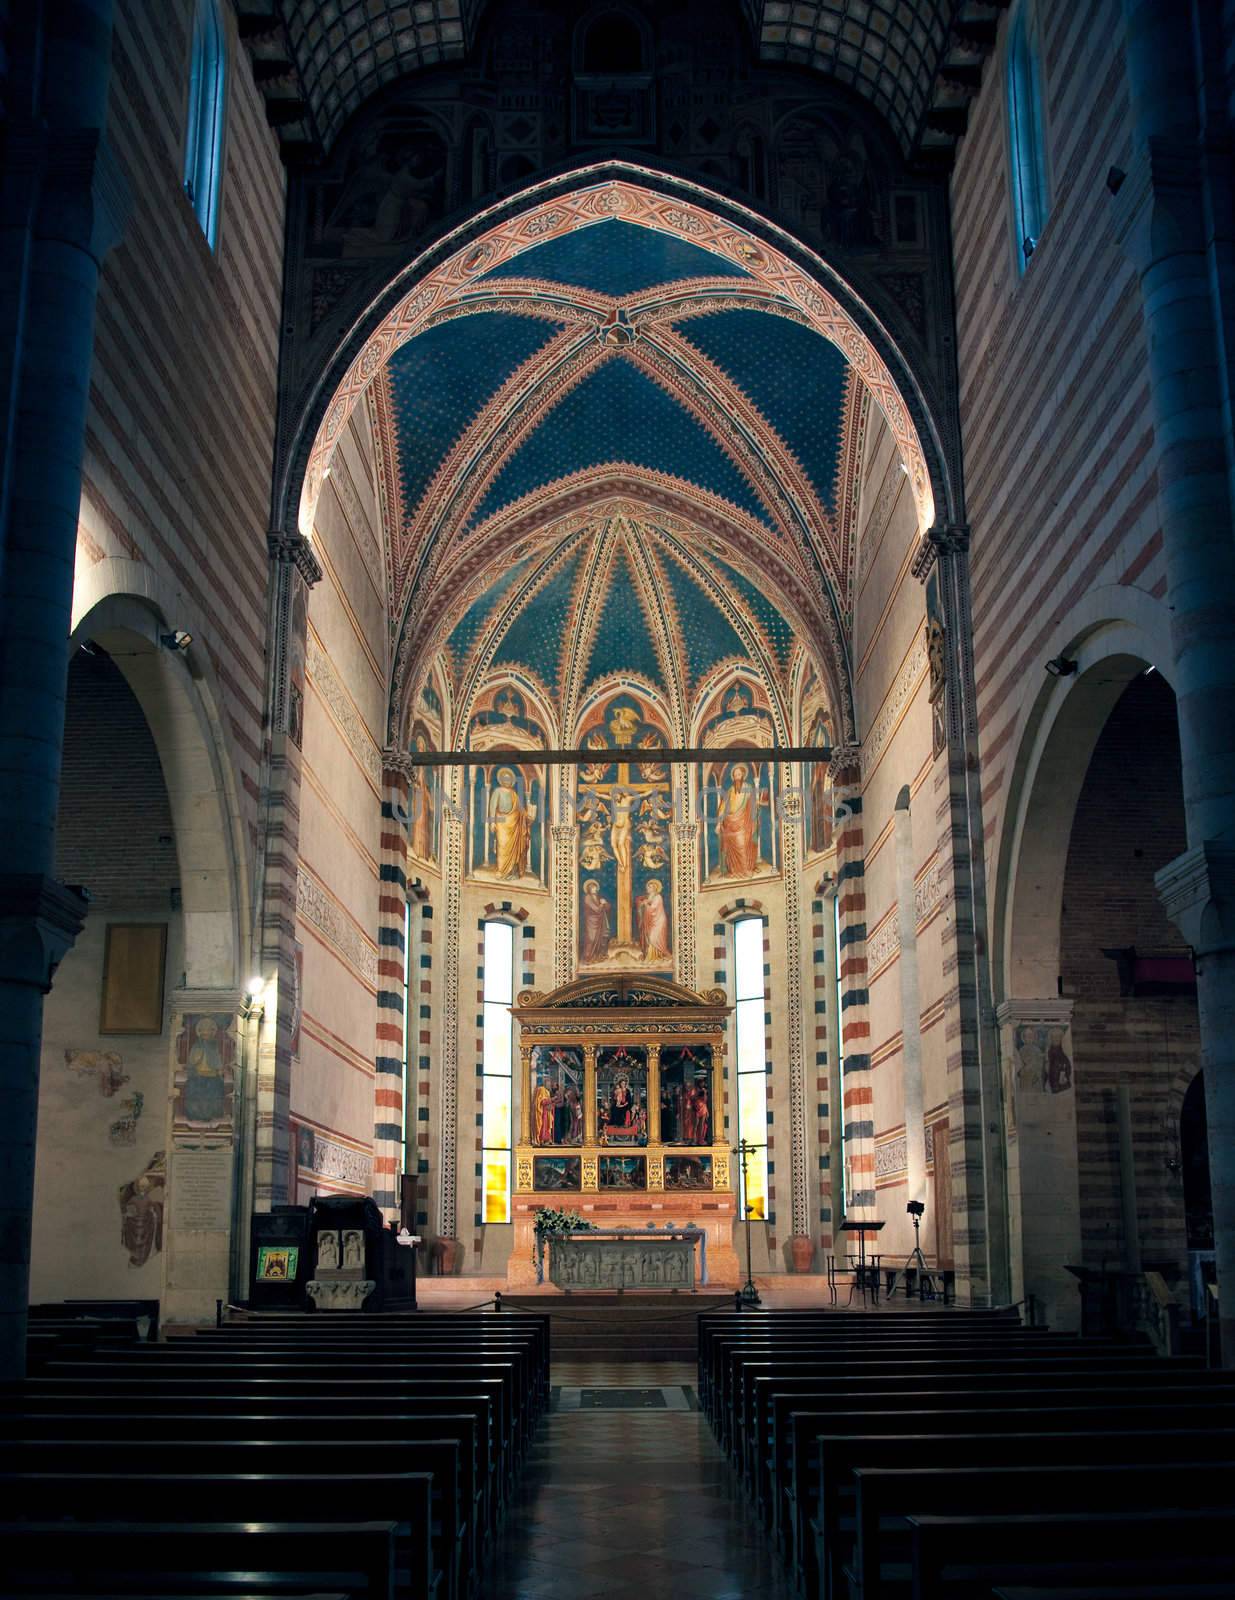 Interior of San Zeno by steheap